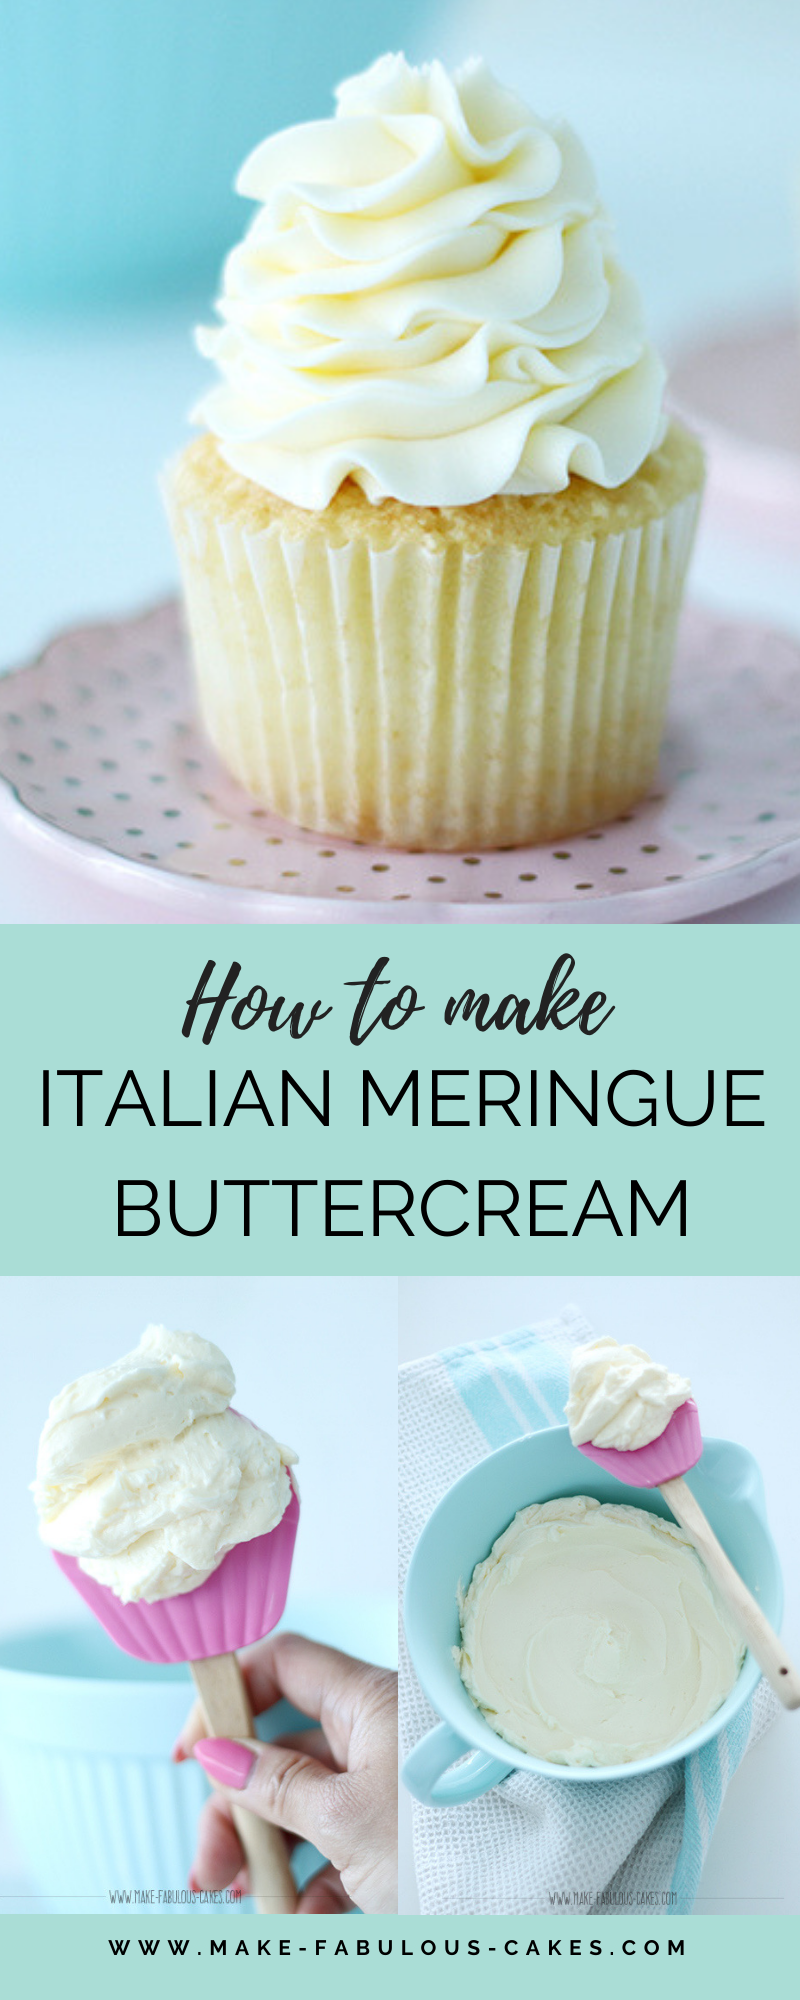 How to make Italian Meringue Buttercream